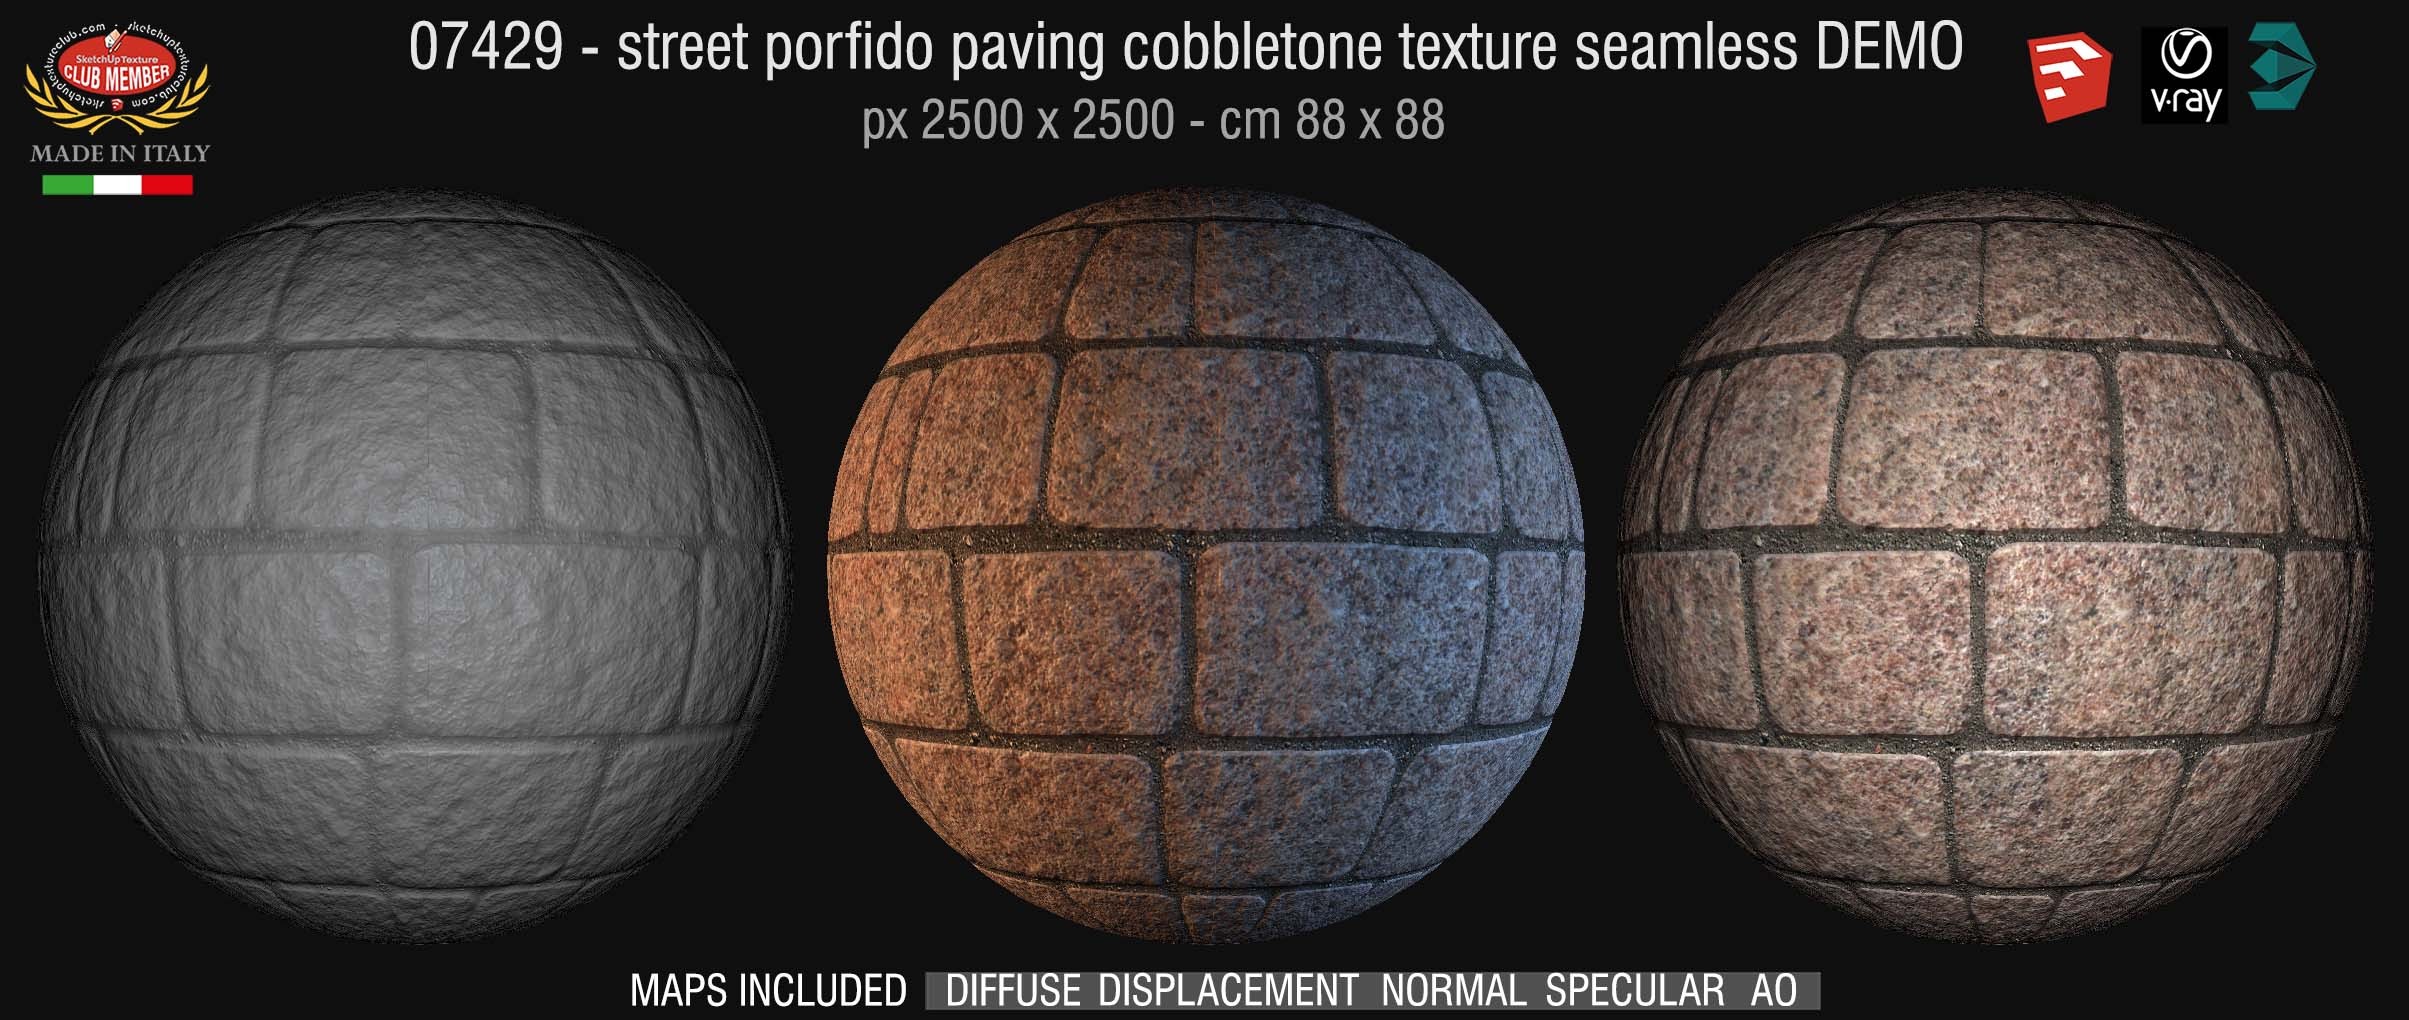 07429 HR Street porfido paving cobblestone texture seamless + maps DEMO